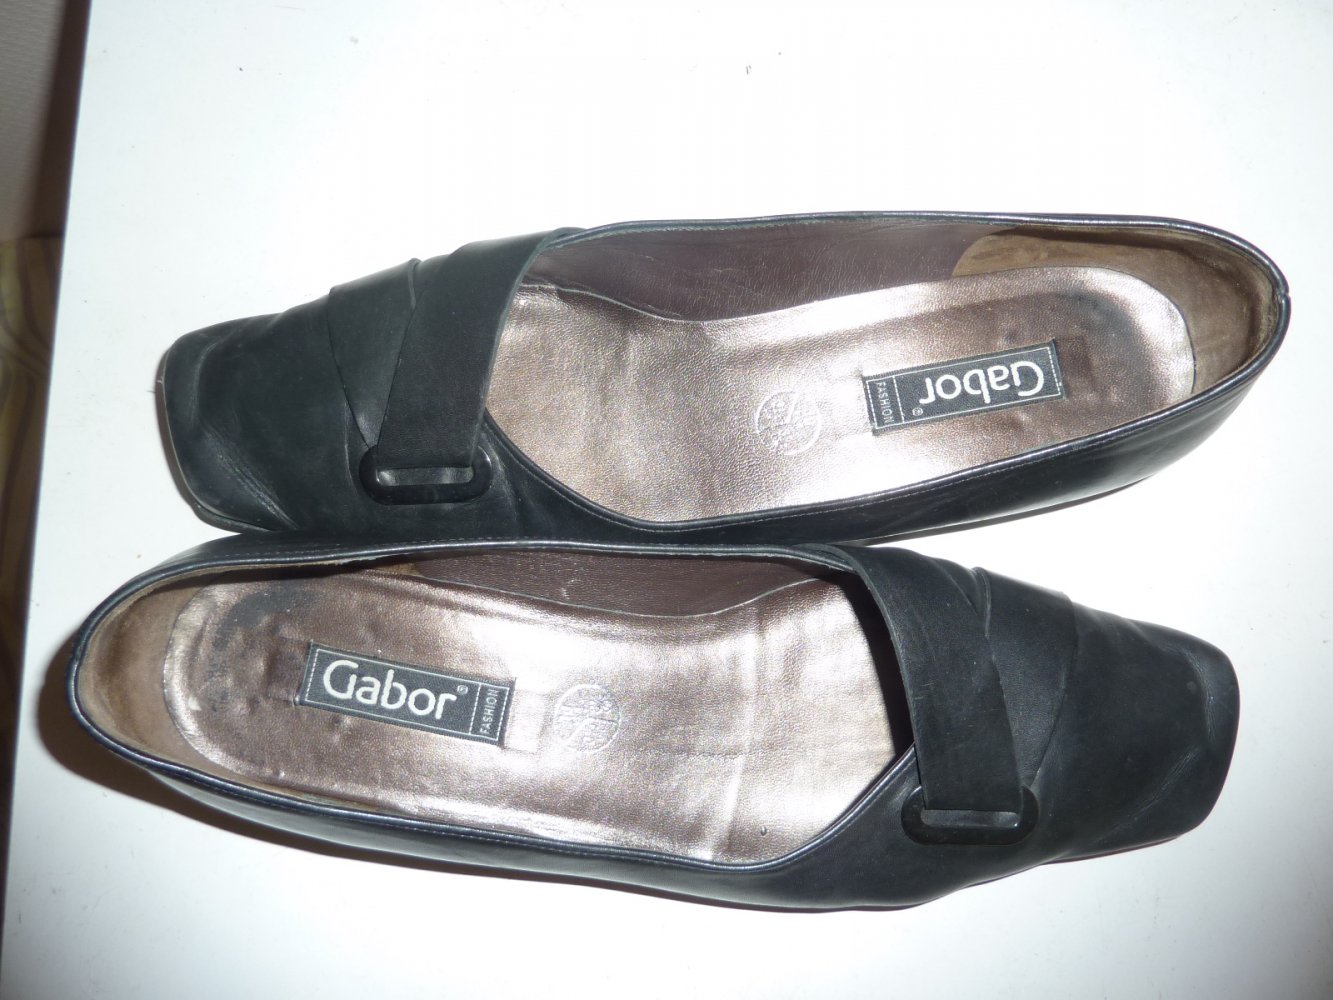 Gabor - Damen echt LEDER Schuhe flach 40 GABOR schwarz 6,5 Balerina Pumps  Slipper :: Kleiderkorb.ch